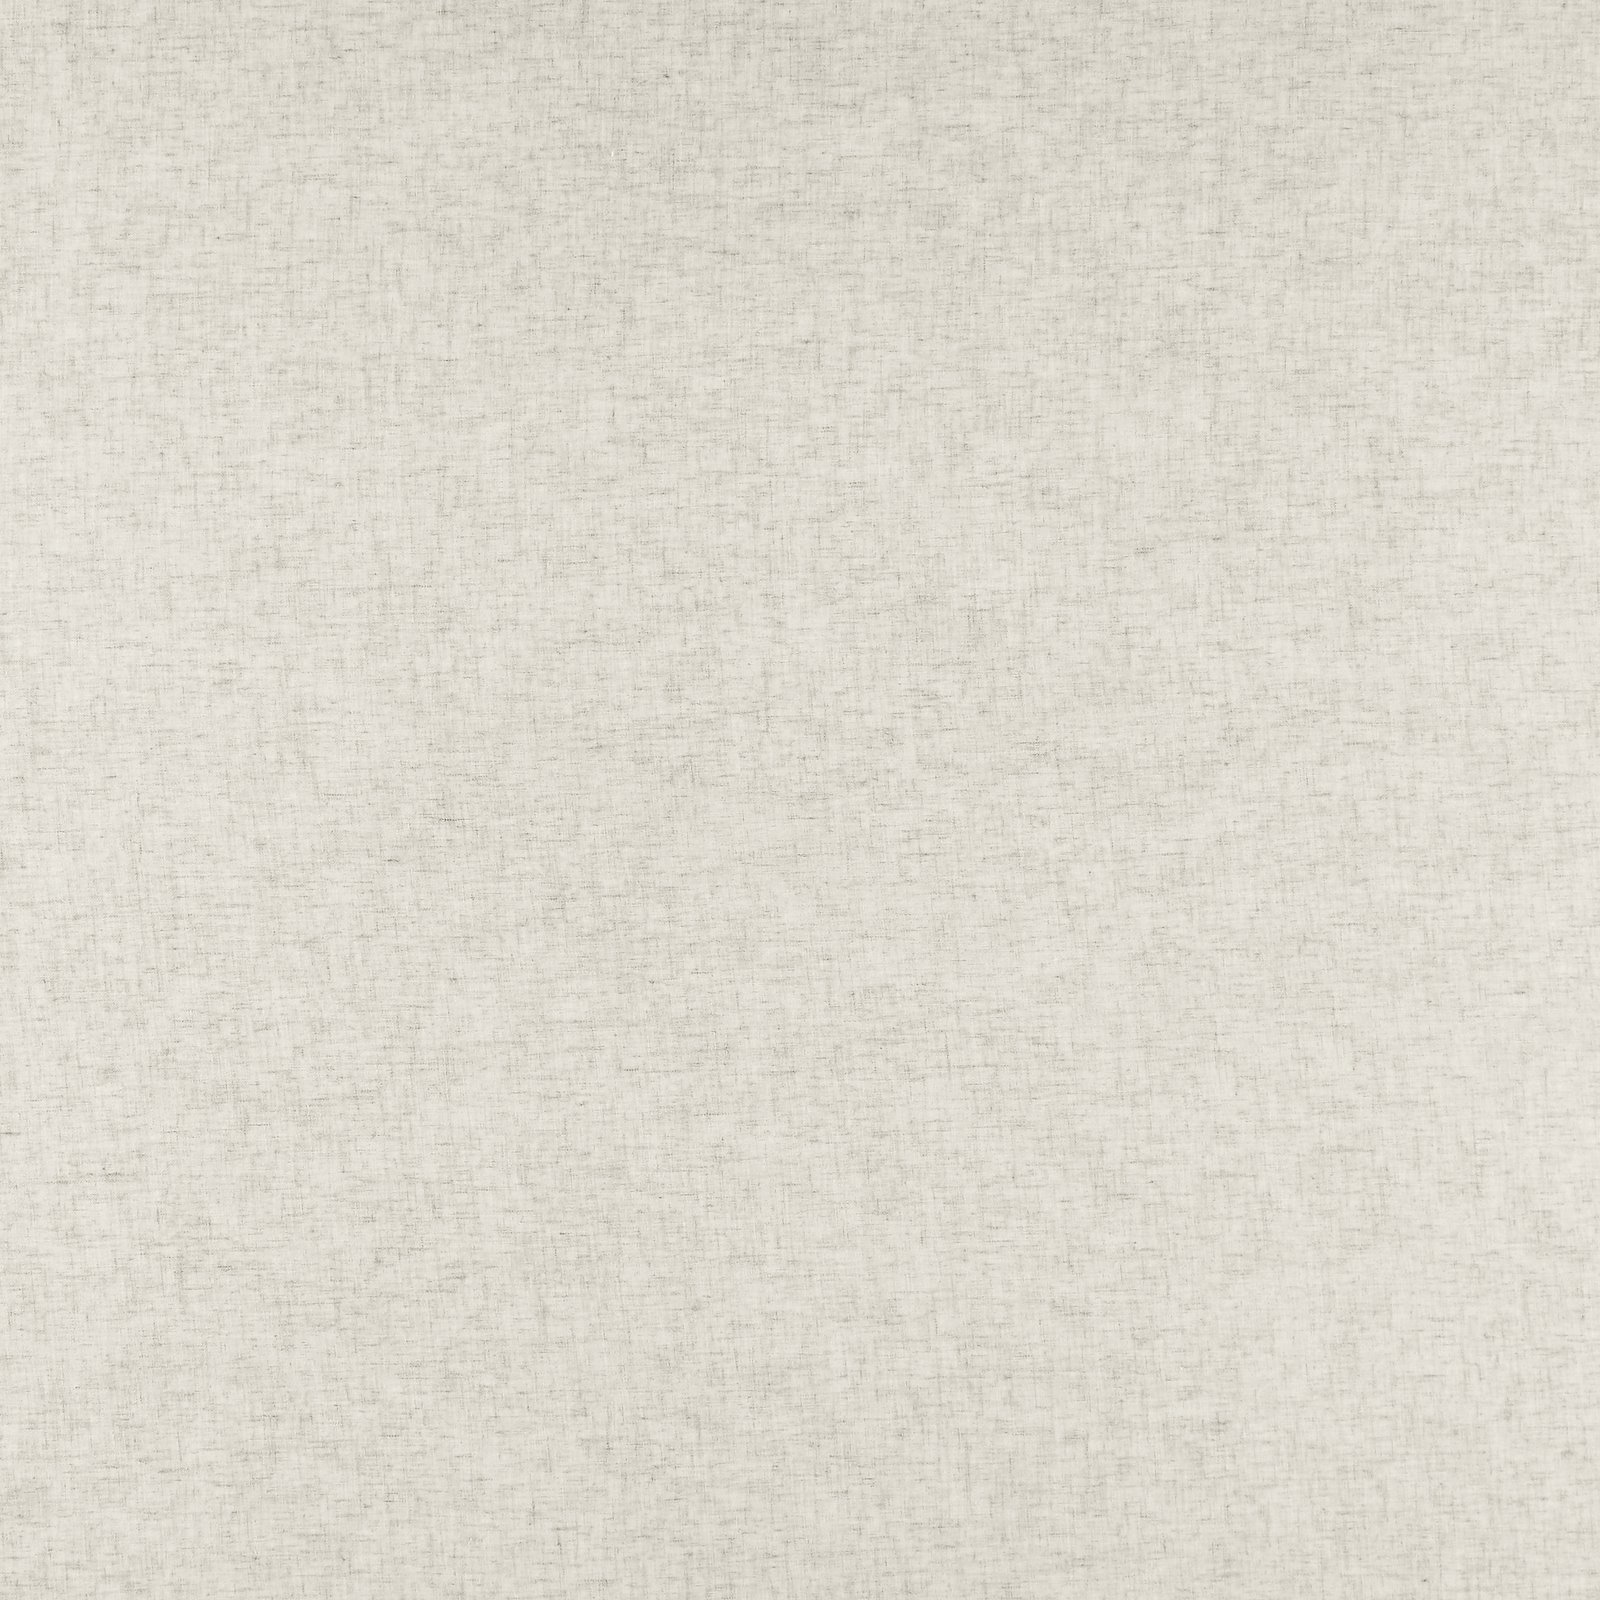 Voile light grey polyester/linen blend 835169_pack_solid